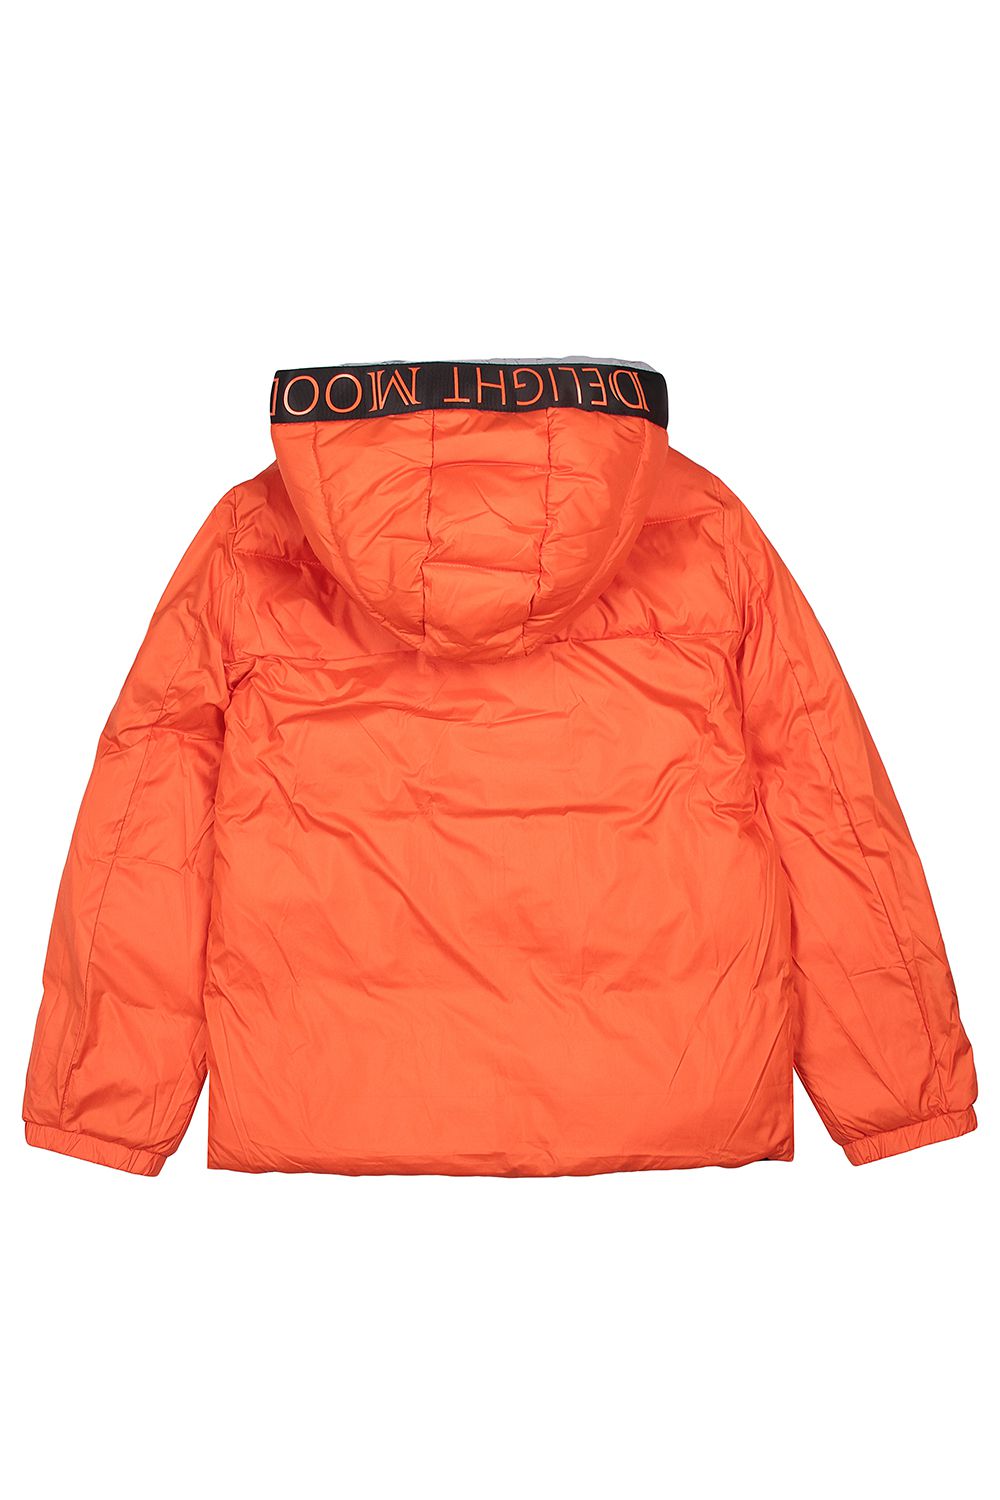 Куртка Noble People, размер 140, цвет оранжевый - фото 4